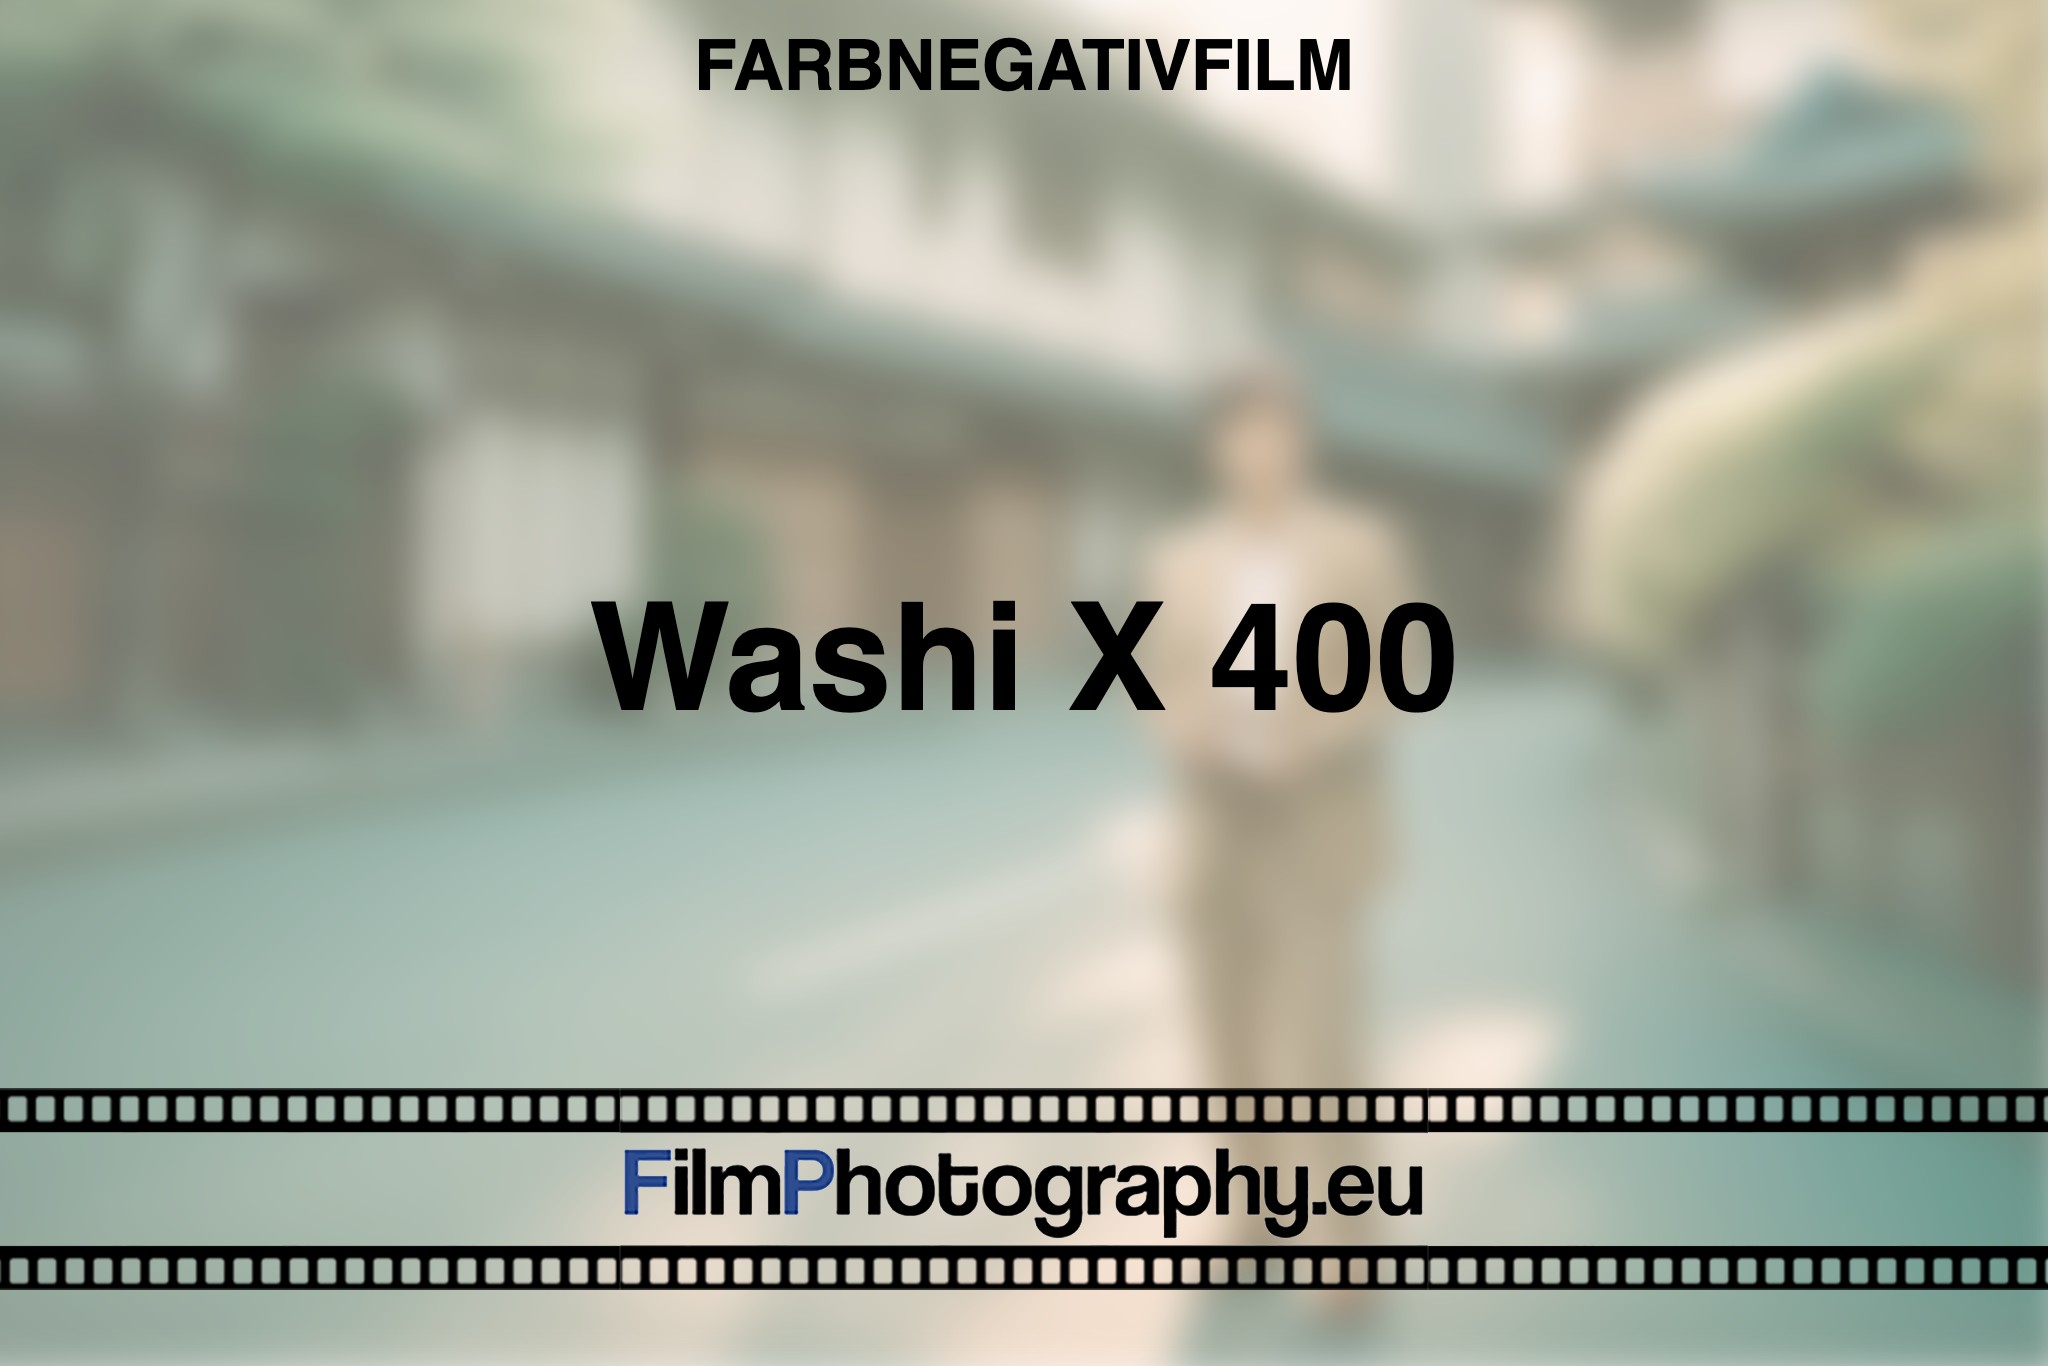 washi-x-400-farbnegativfilm-bnv